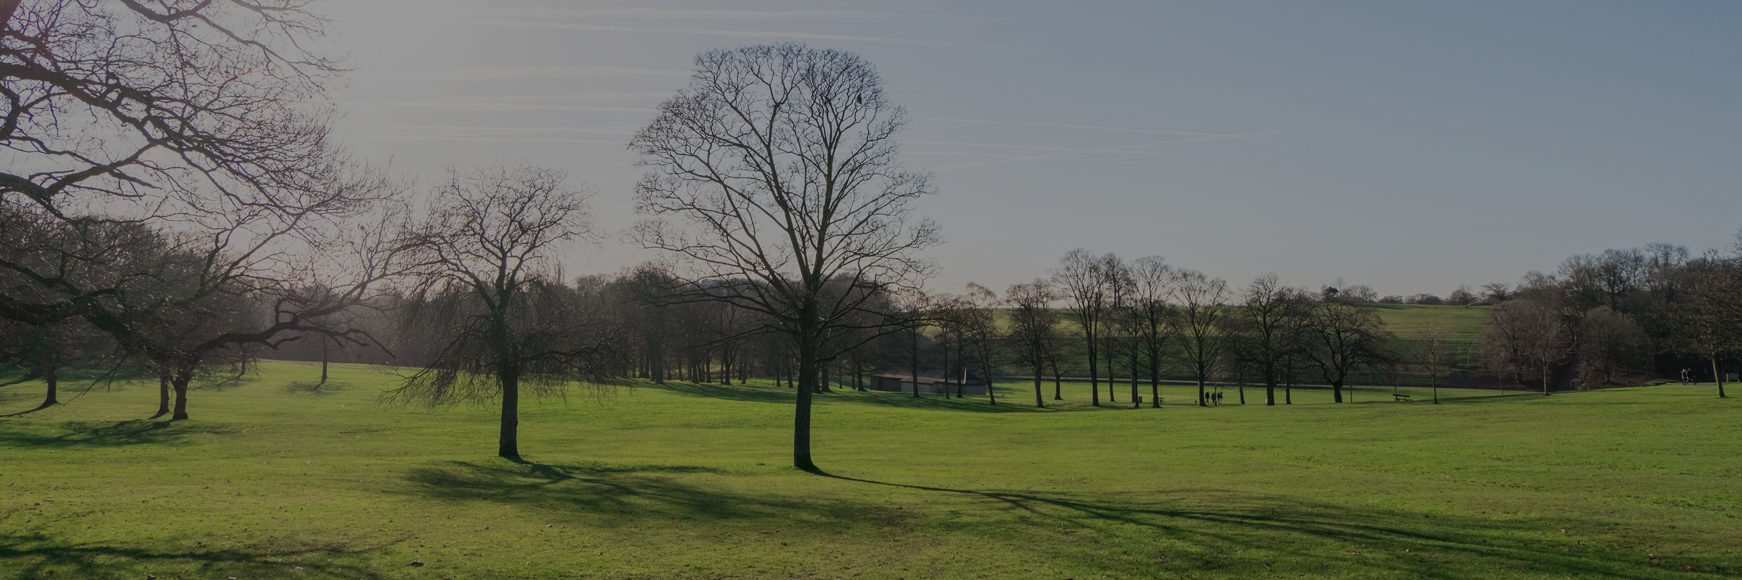 Top 5 Greenspaces to visit in Leeds banner image